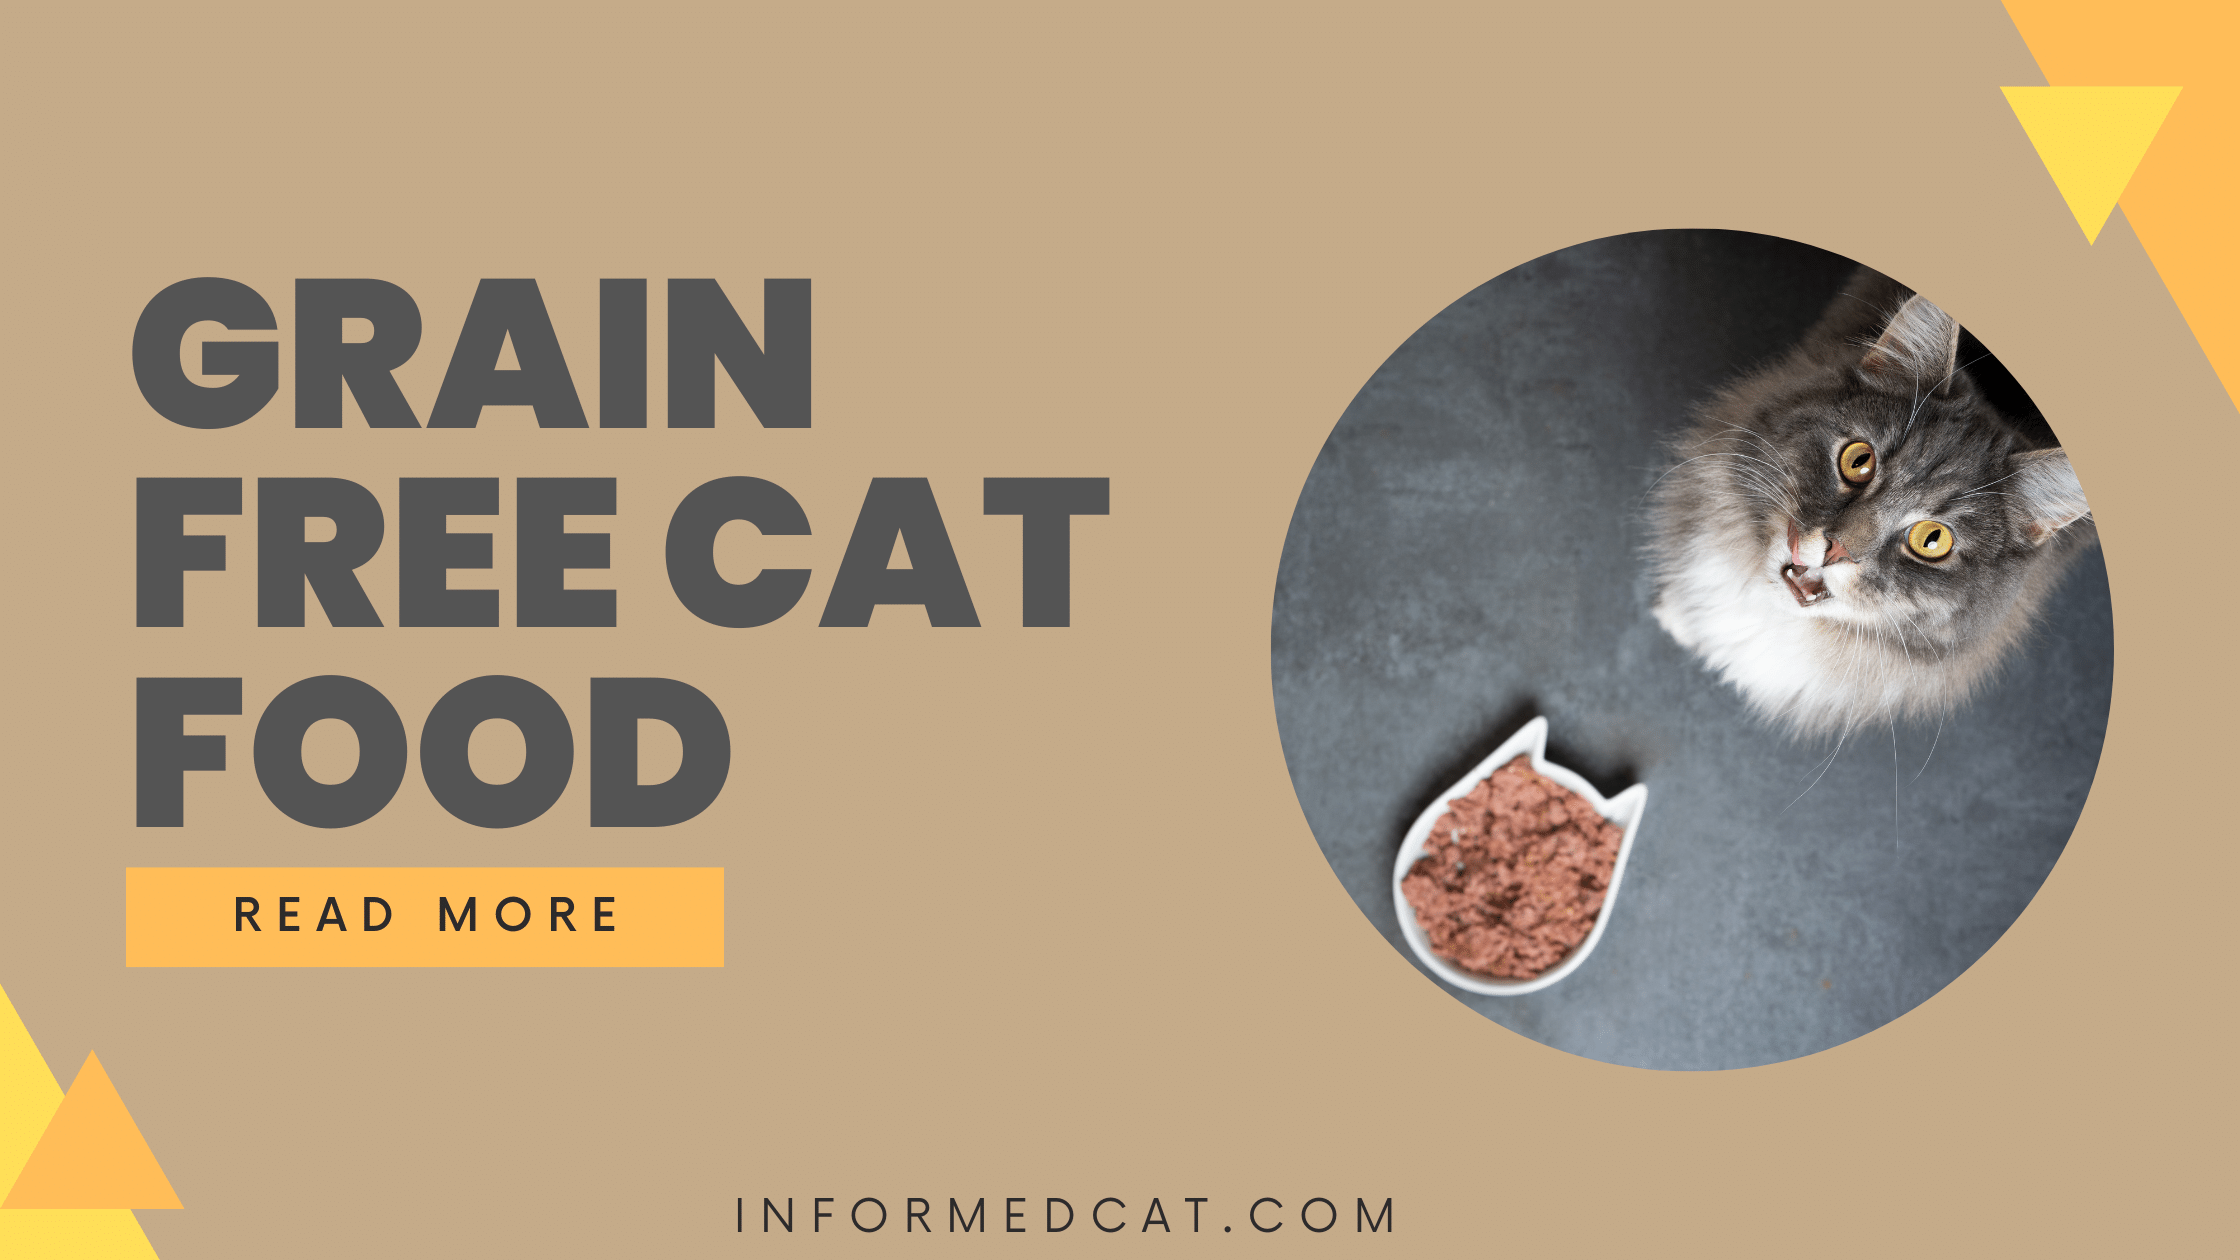 Benefits of grain free cat food